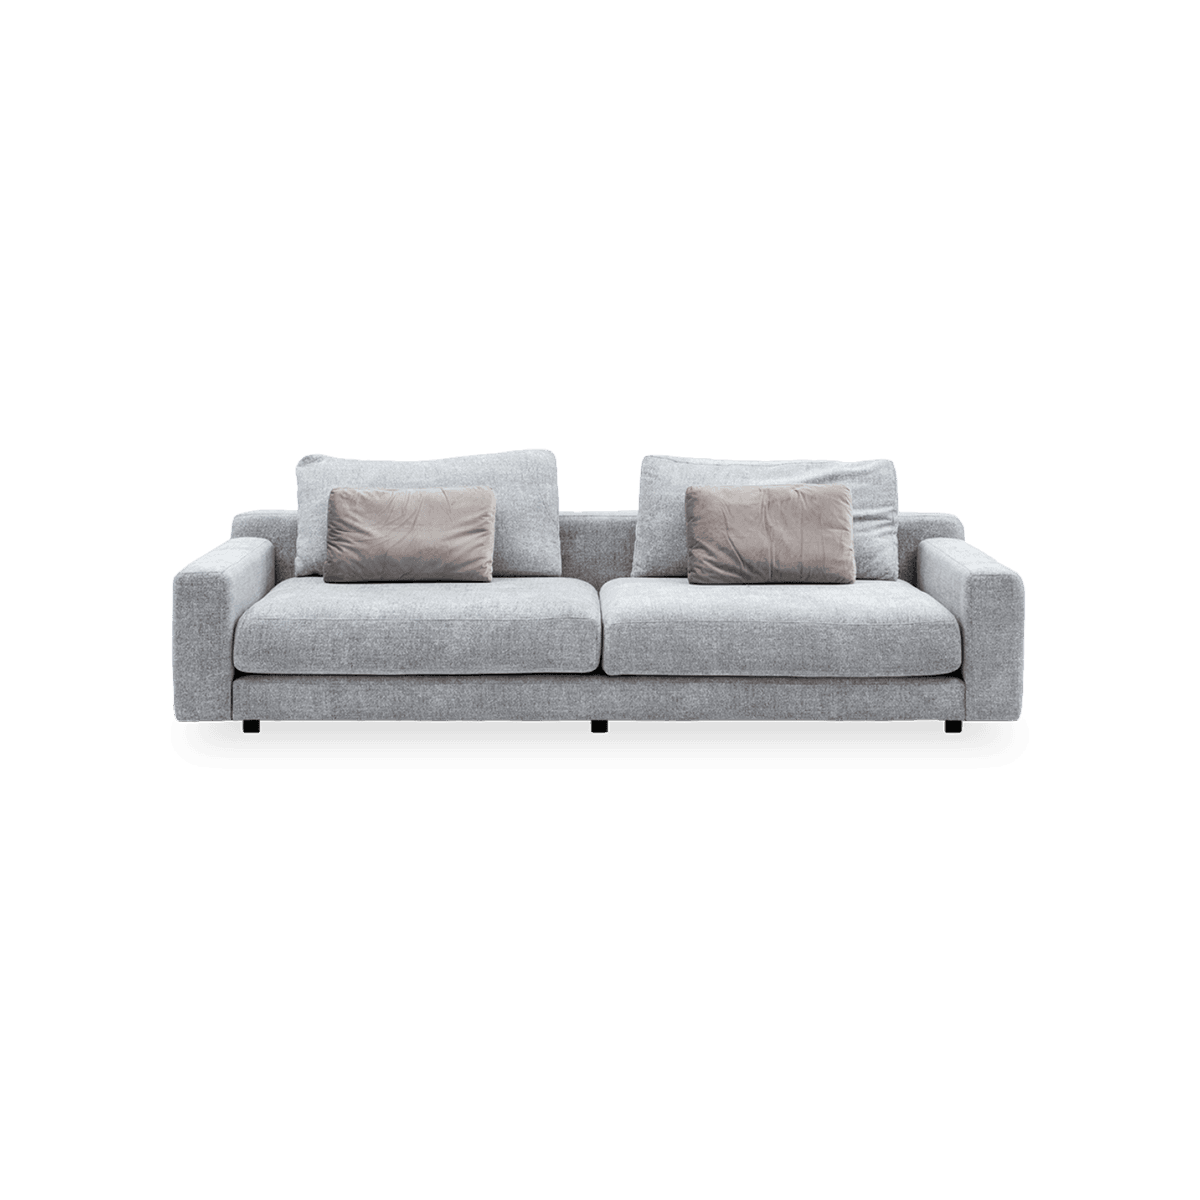 Stone 5 Seater Fabric Sofa - Grey white 